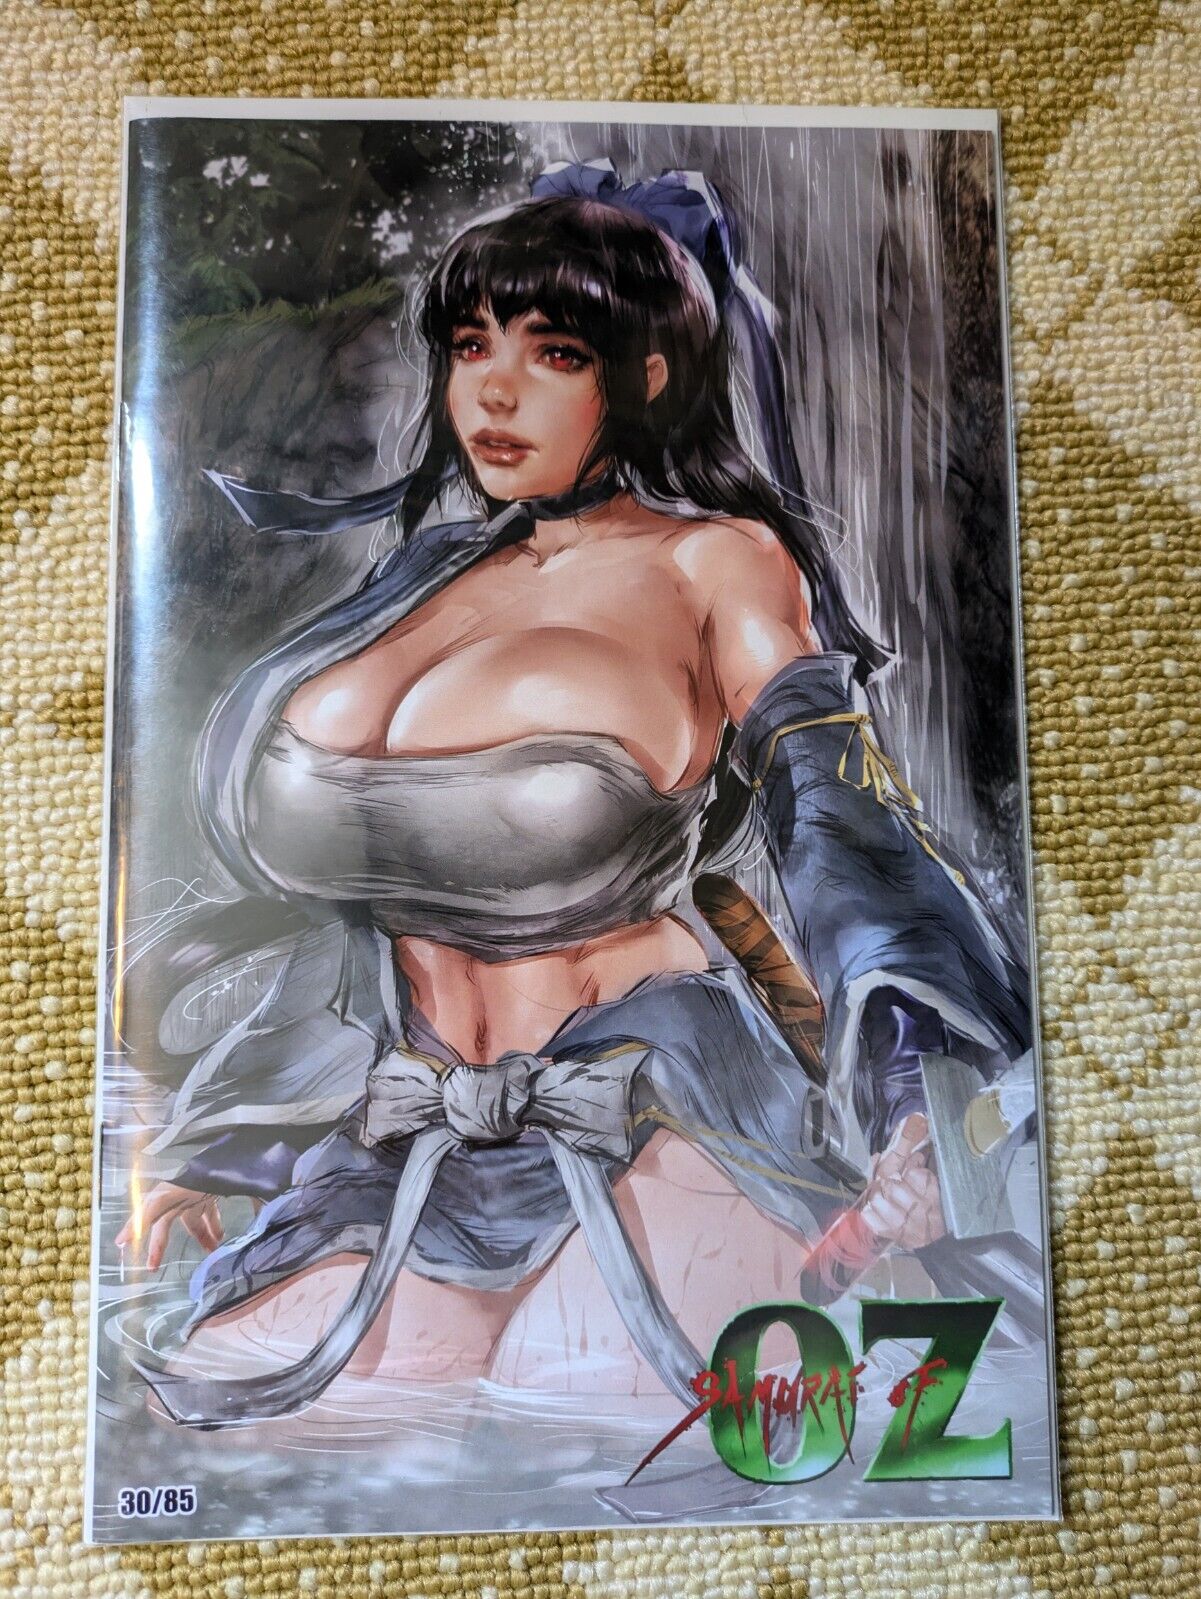 Samurai of Oz #1 - Waterfall Dorothy Variant 30 of 85 Cover by Ale Borgobello